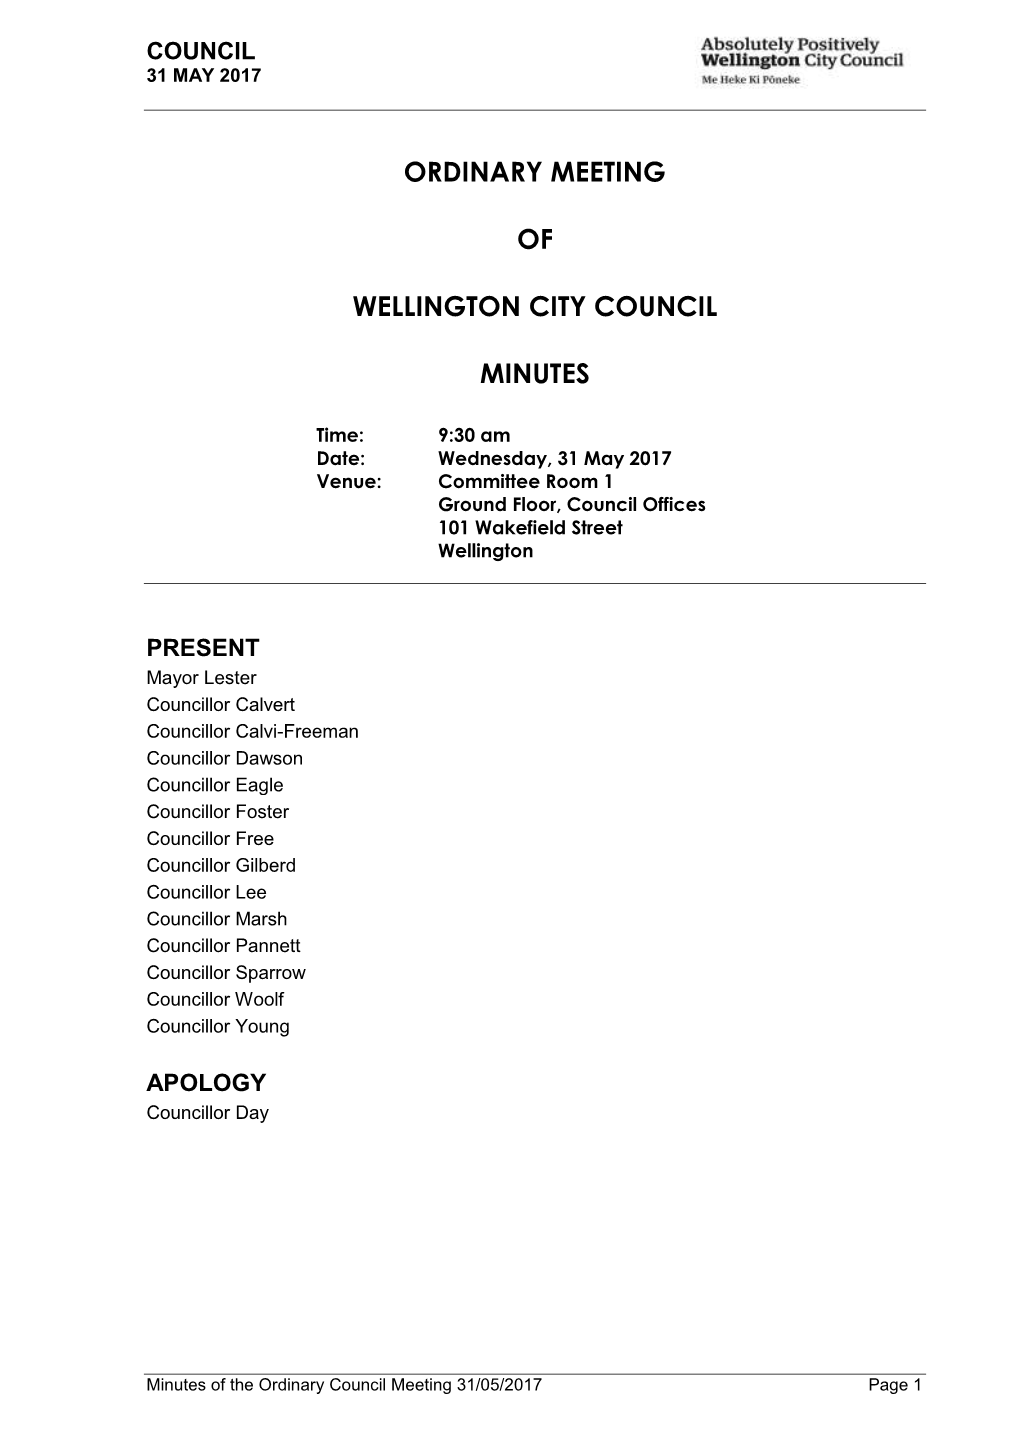 Council Open Minutes